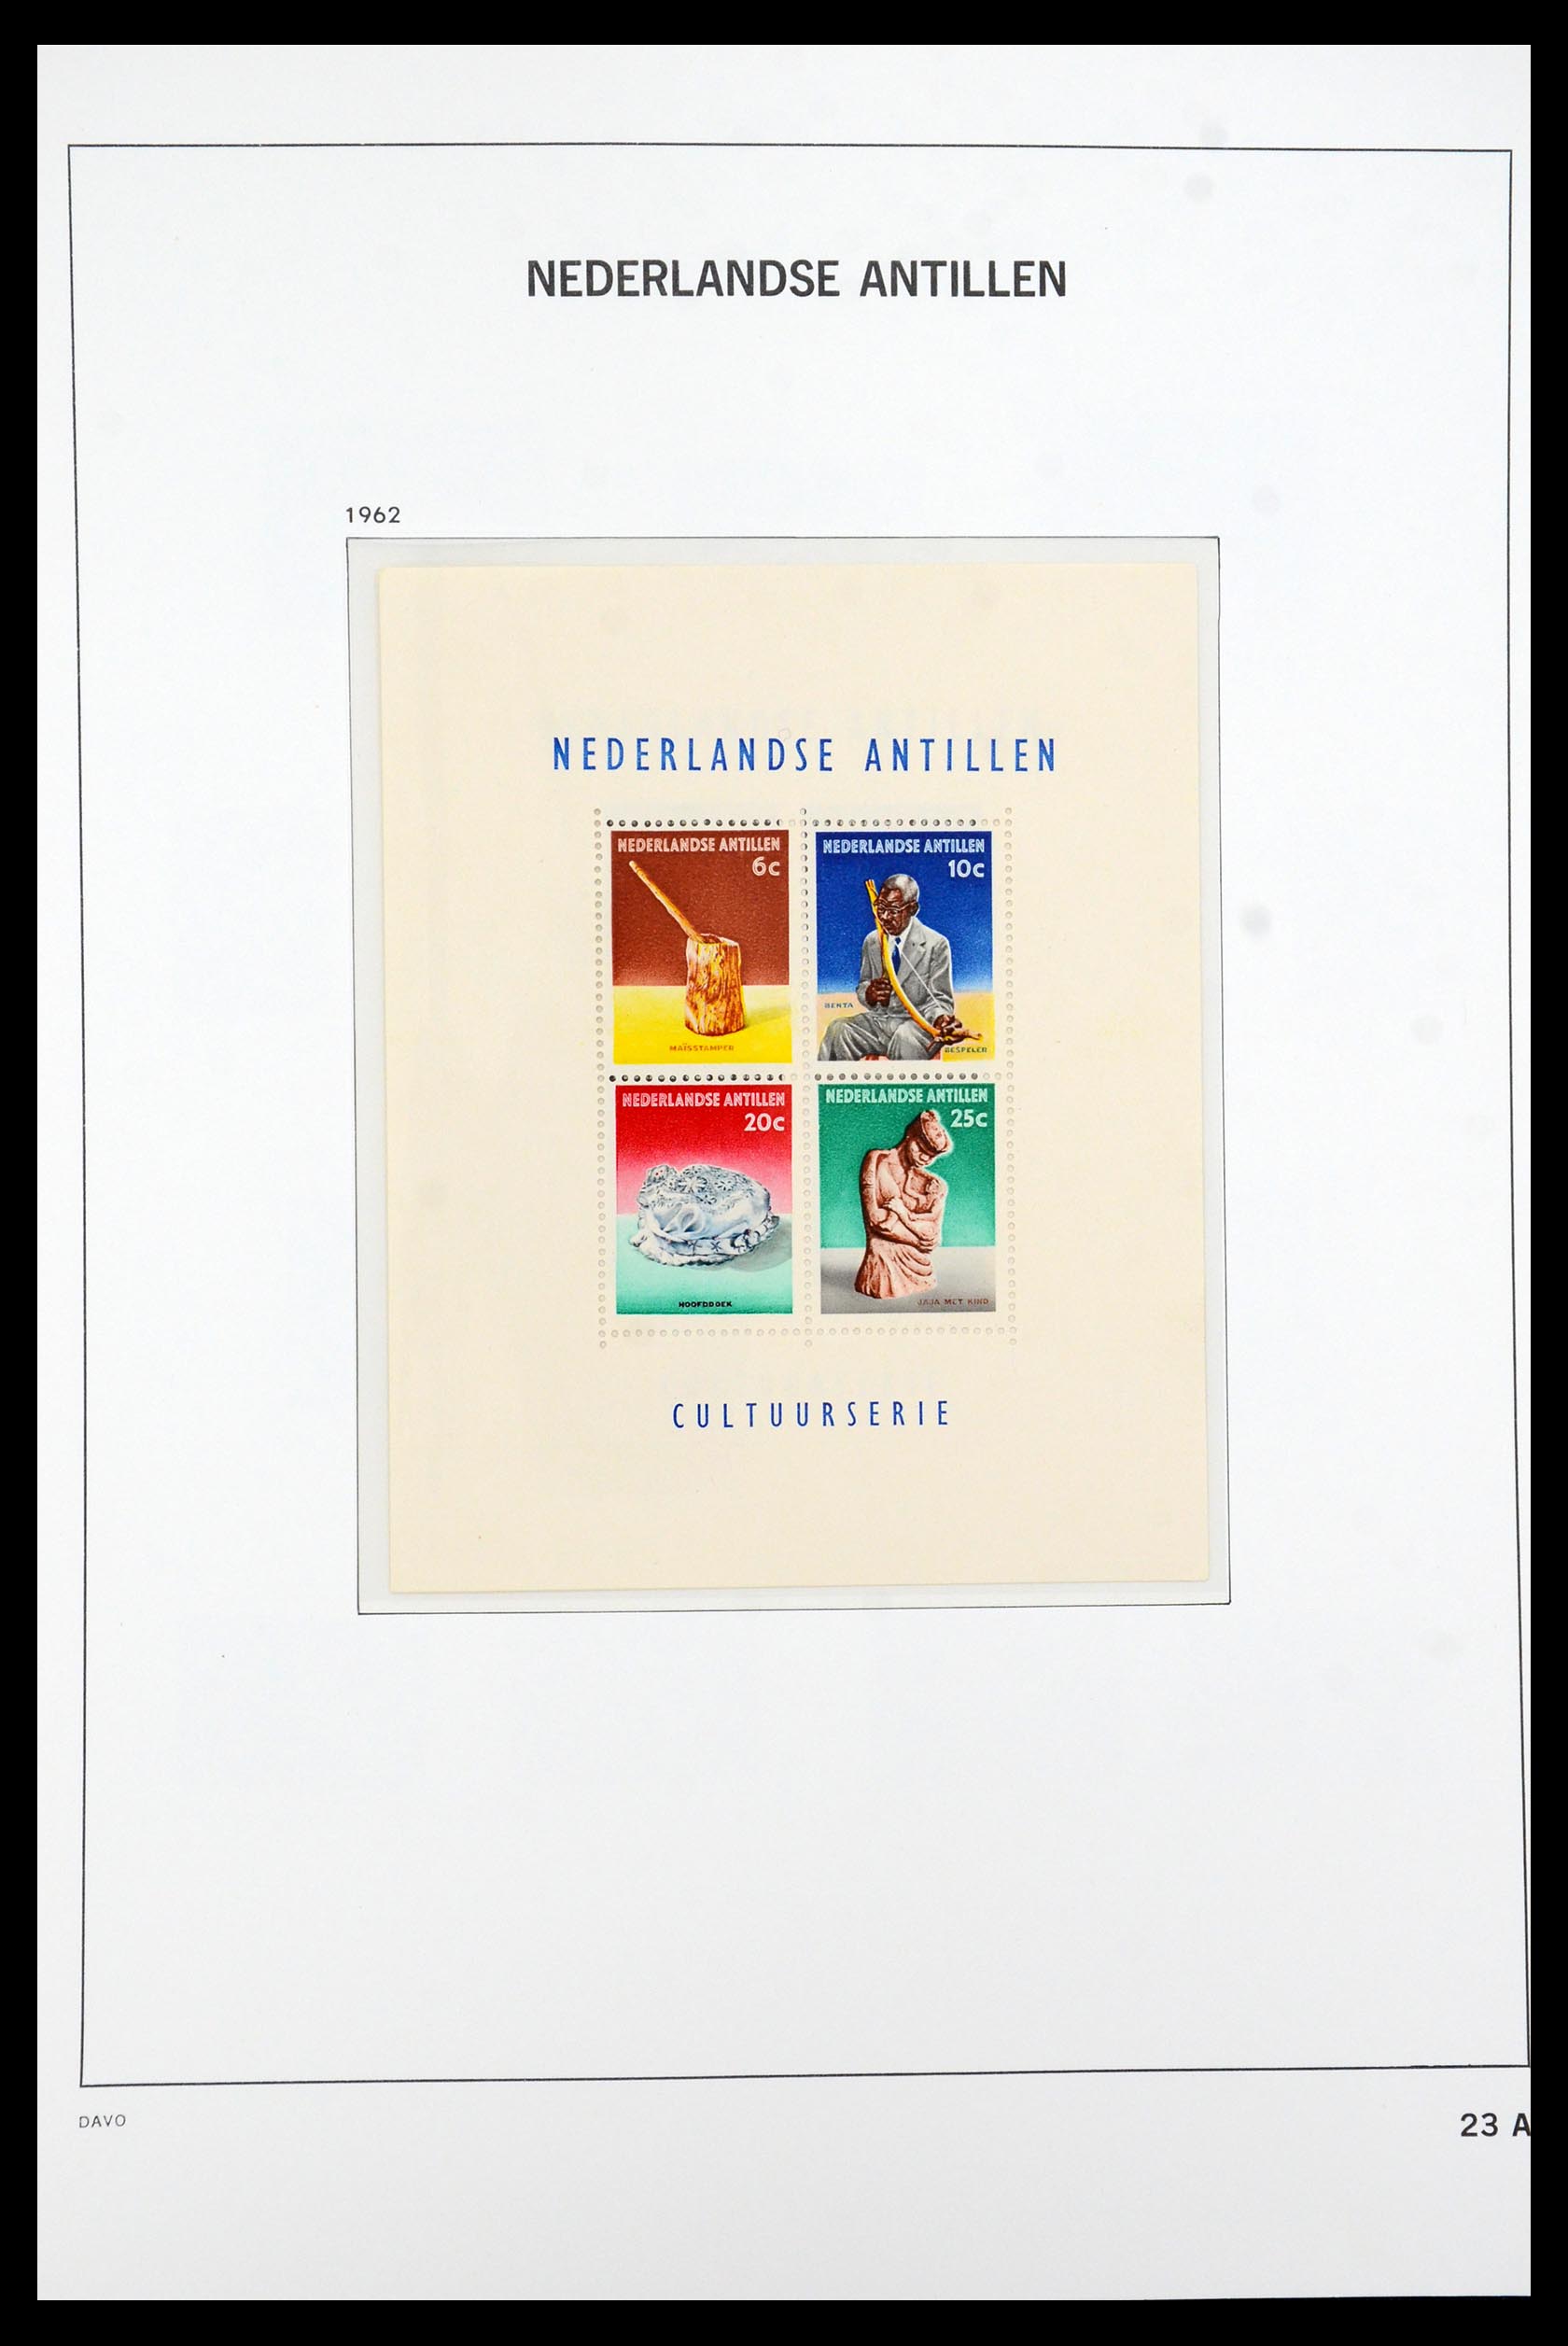 36393 011 - Stamp collection 36393 Netherlands Antilles 1949-2010.